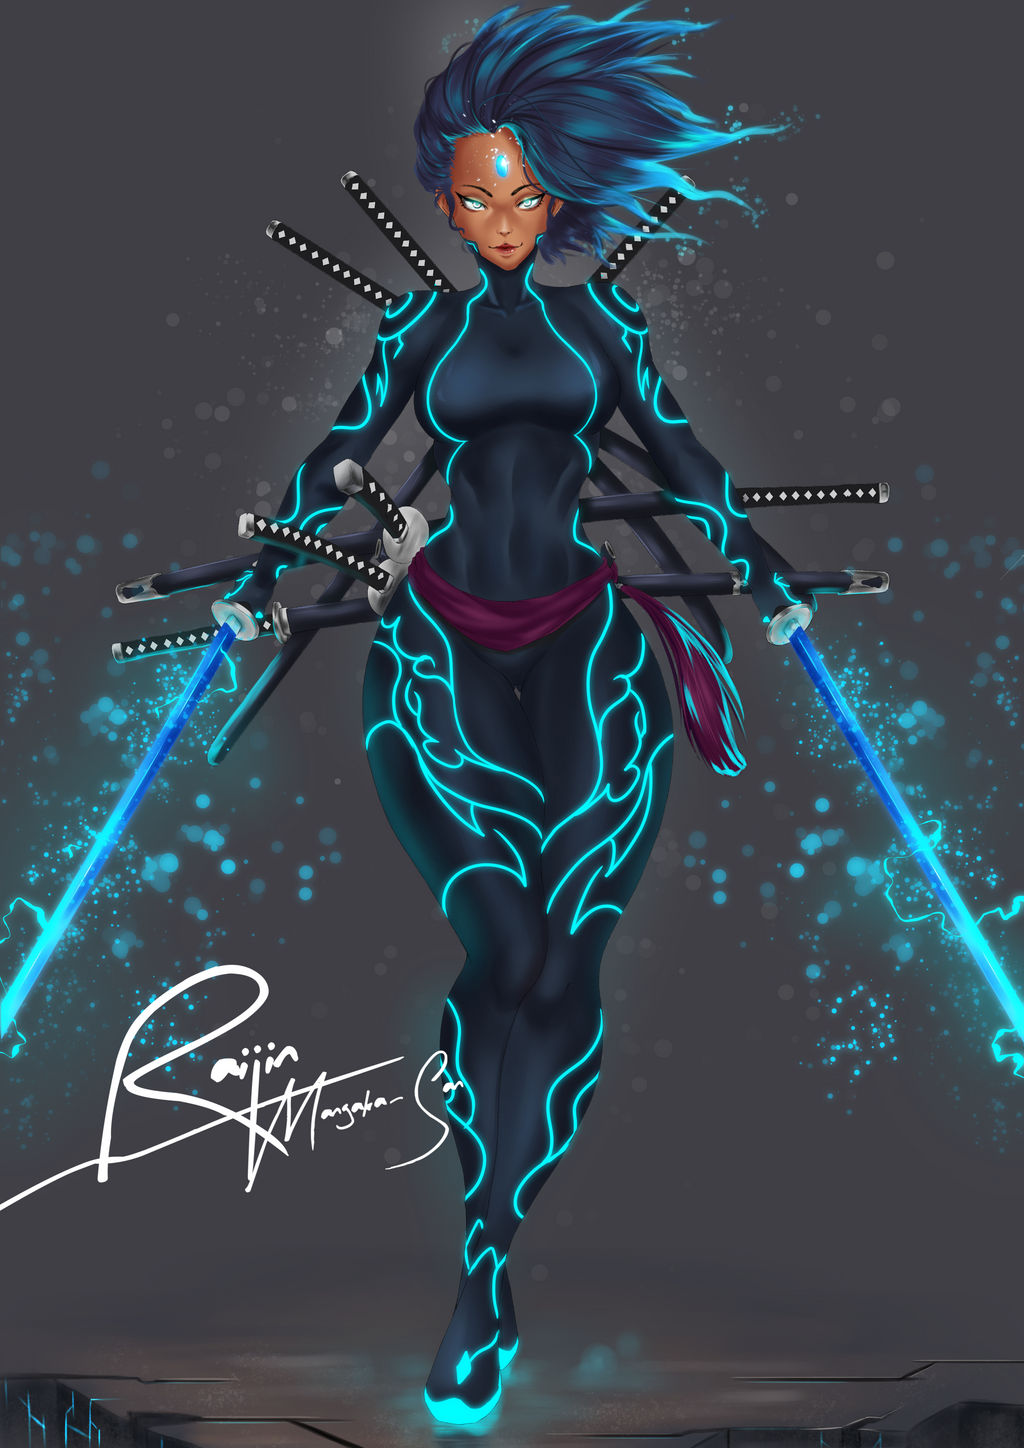 Alexa - The Ultimate Blade Master